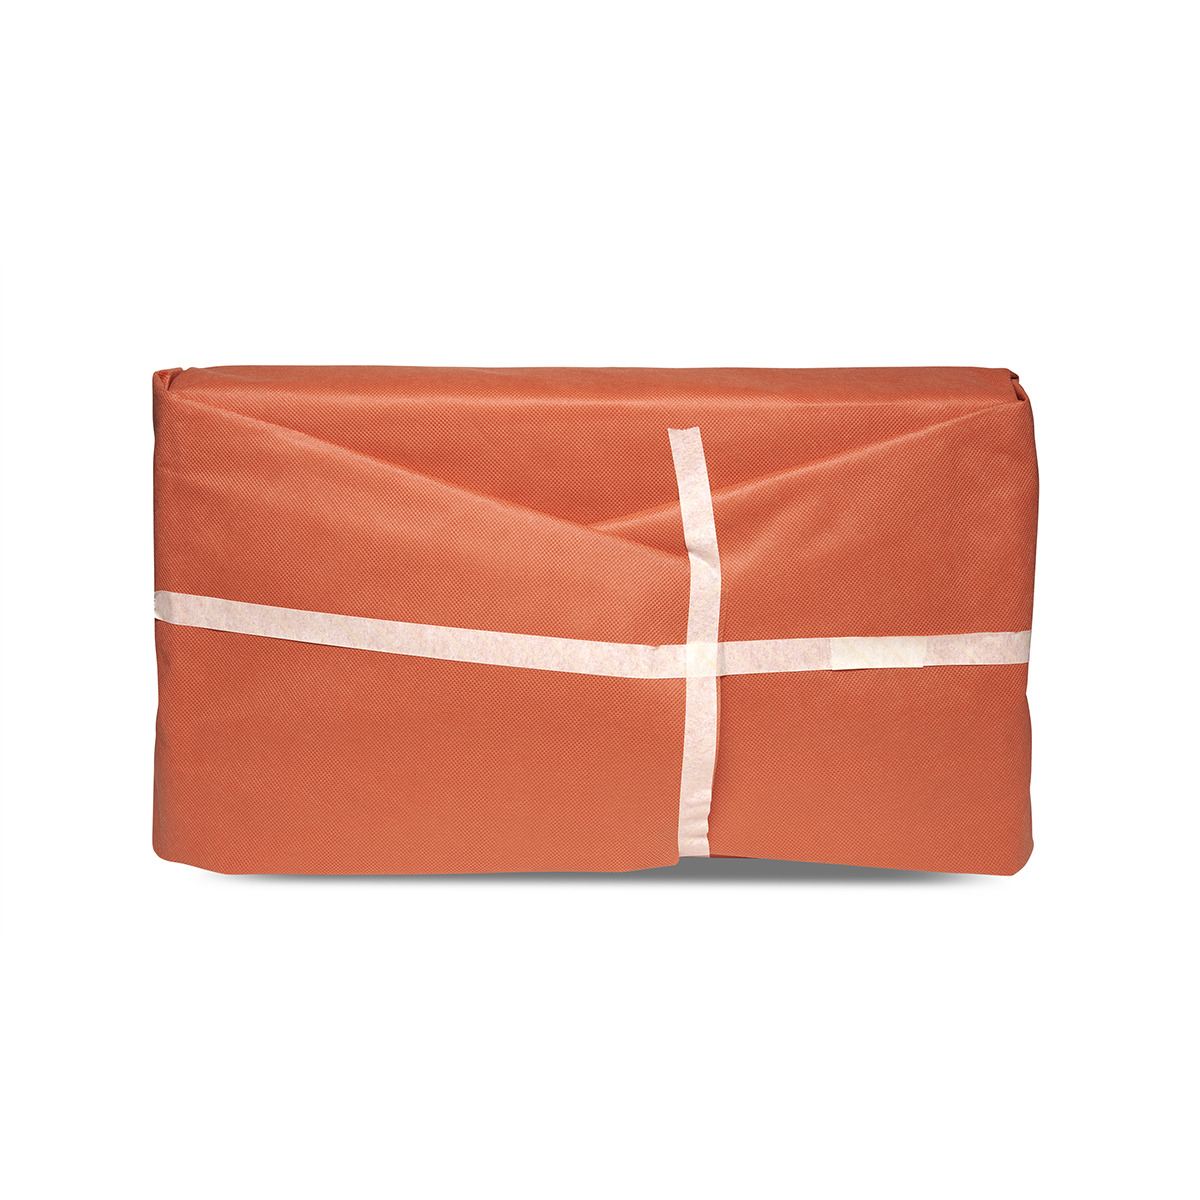 Clinipak Orange Transport Wrap  Image